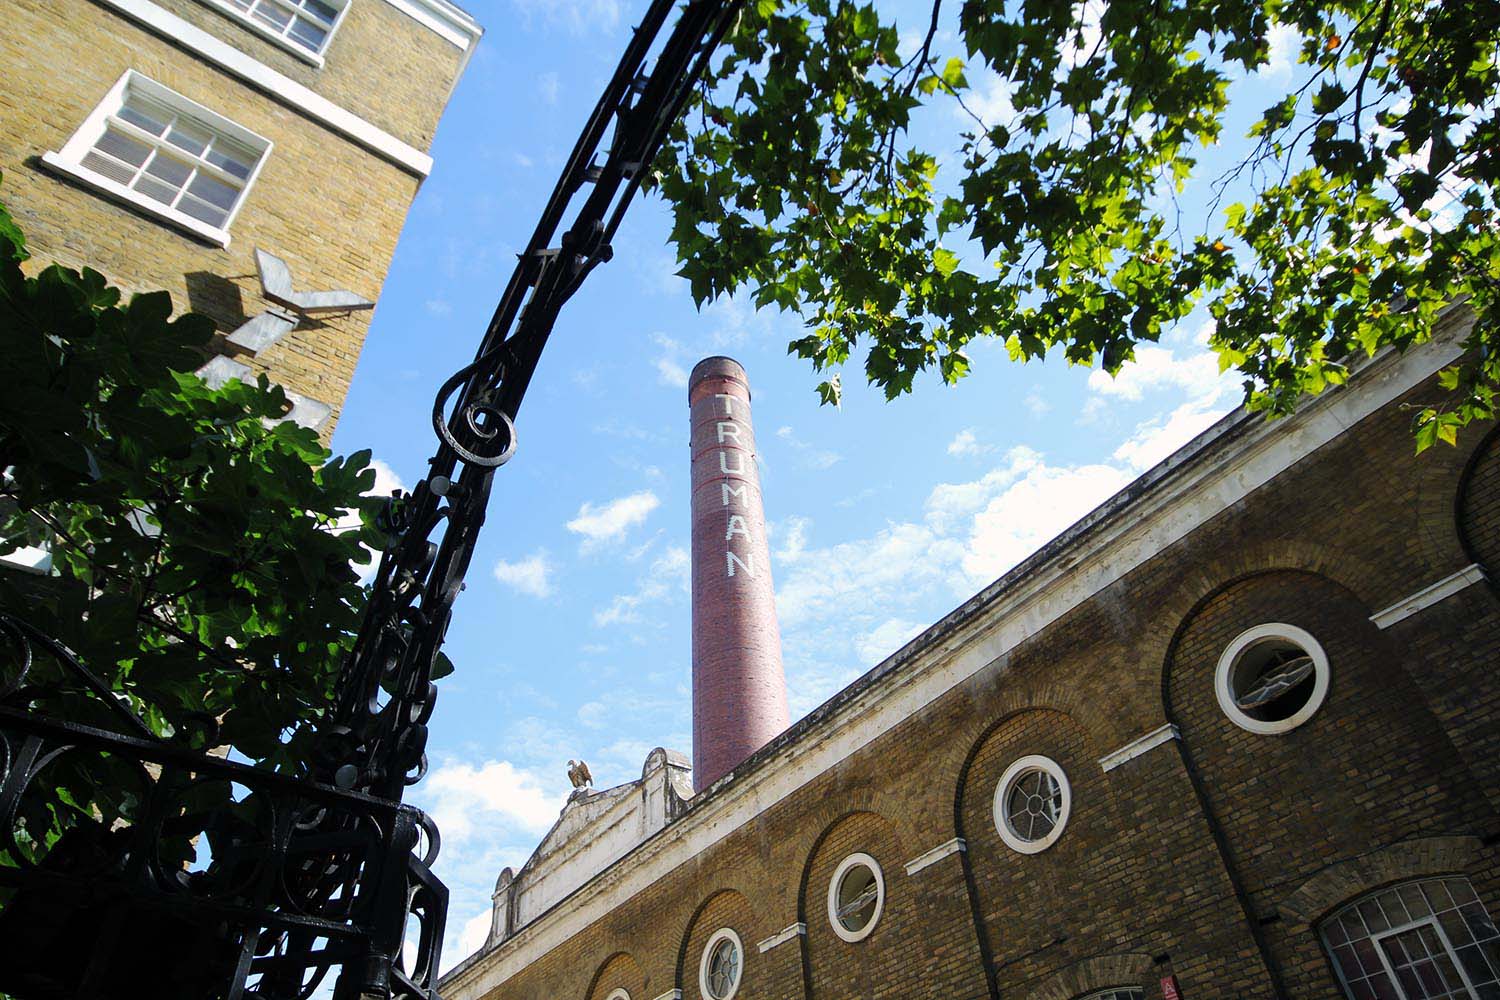 Old Truman Brewery, Brick Lane, East London, Shoreditch